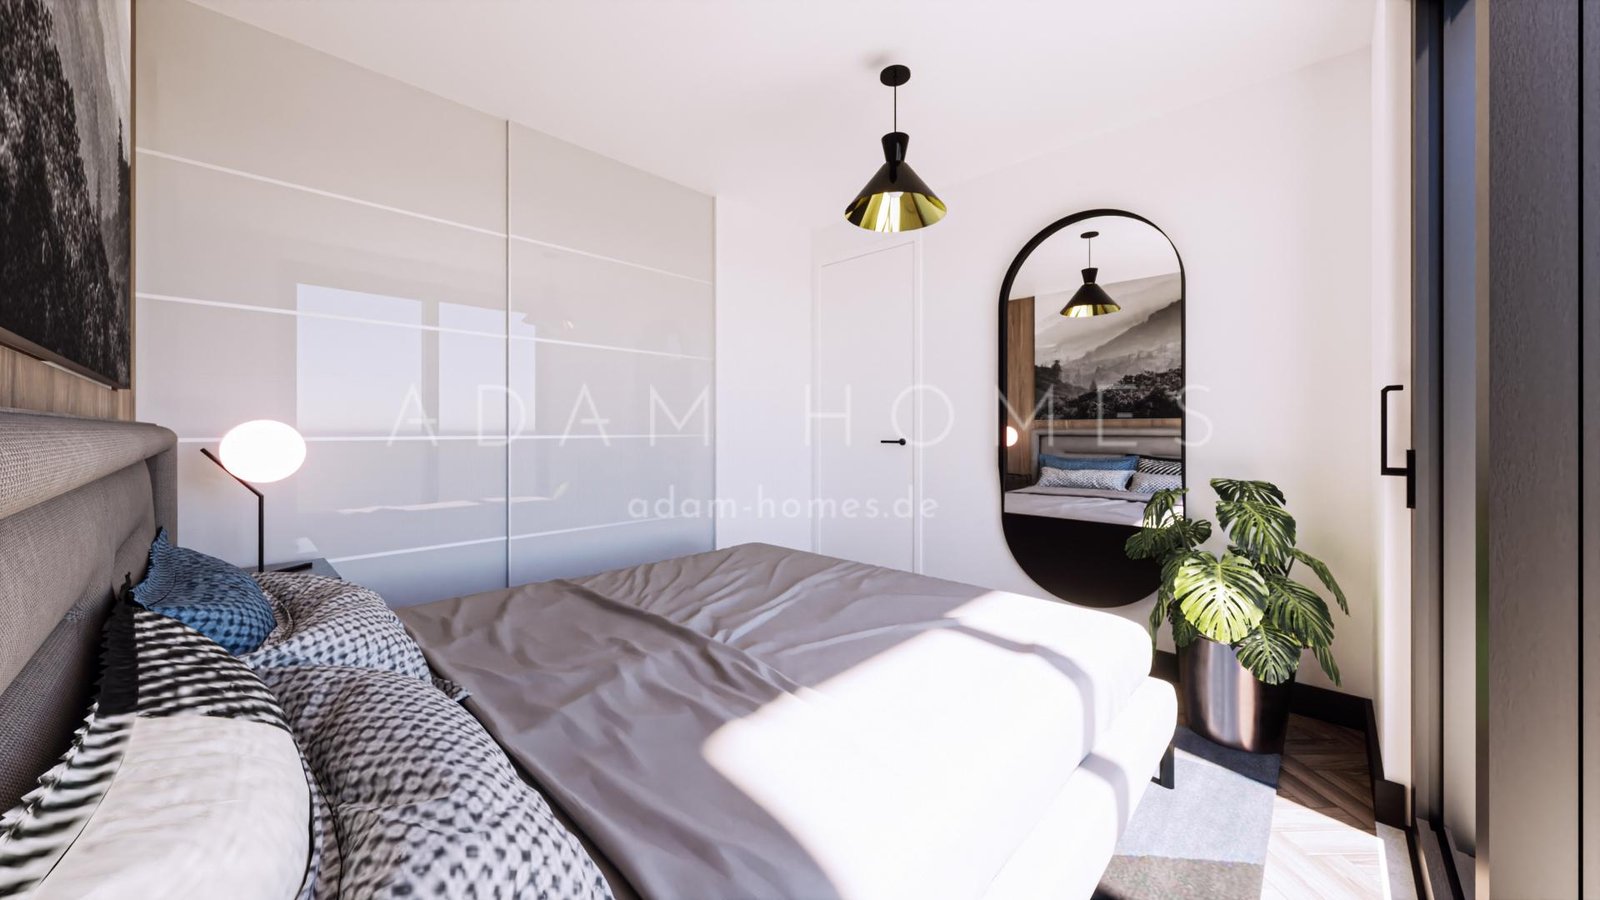 2 bedroom apartments in a luxury eco-resort complex